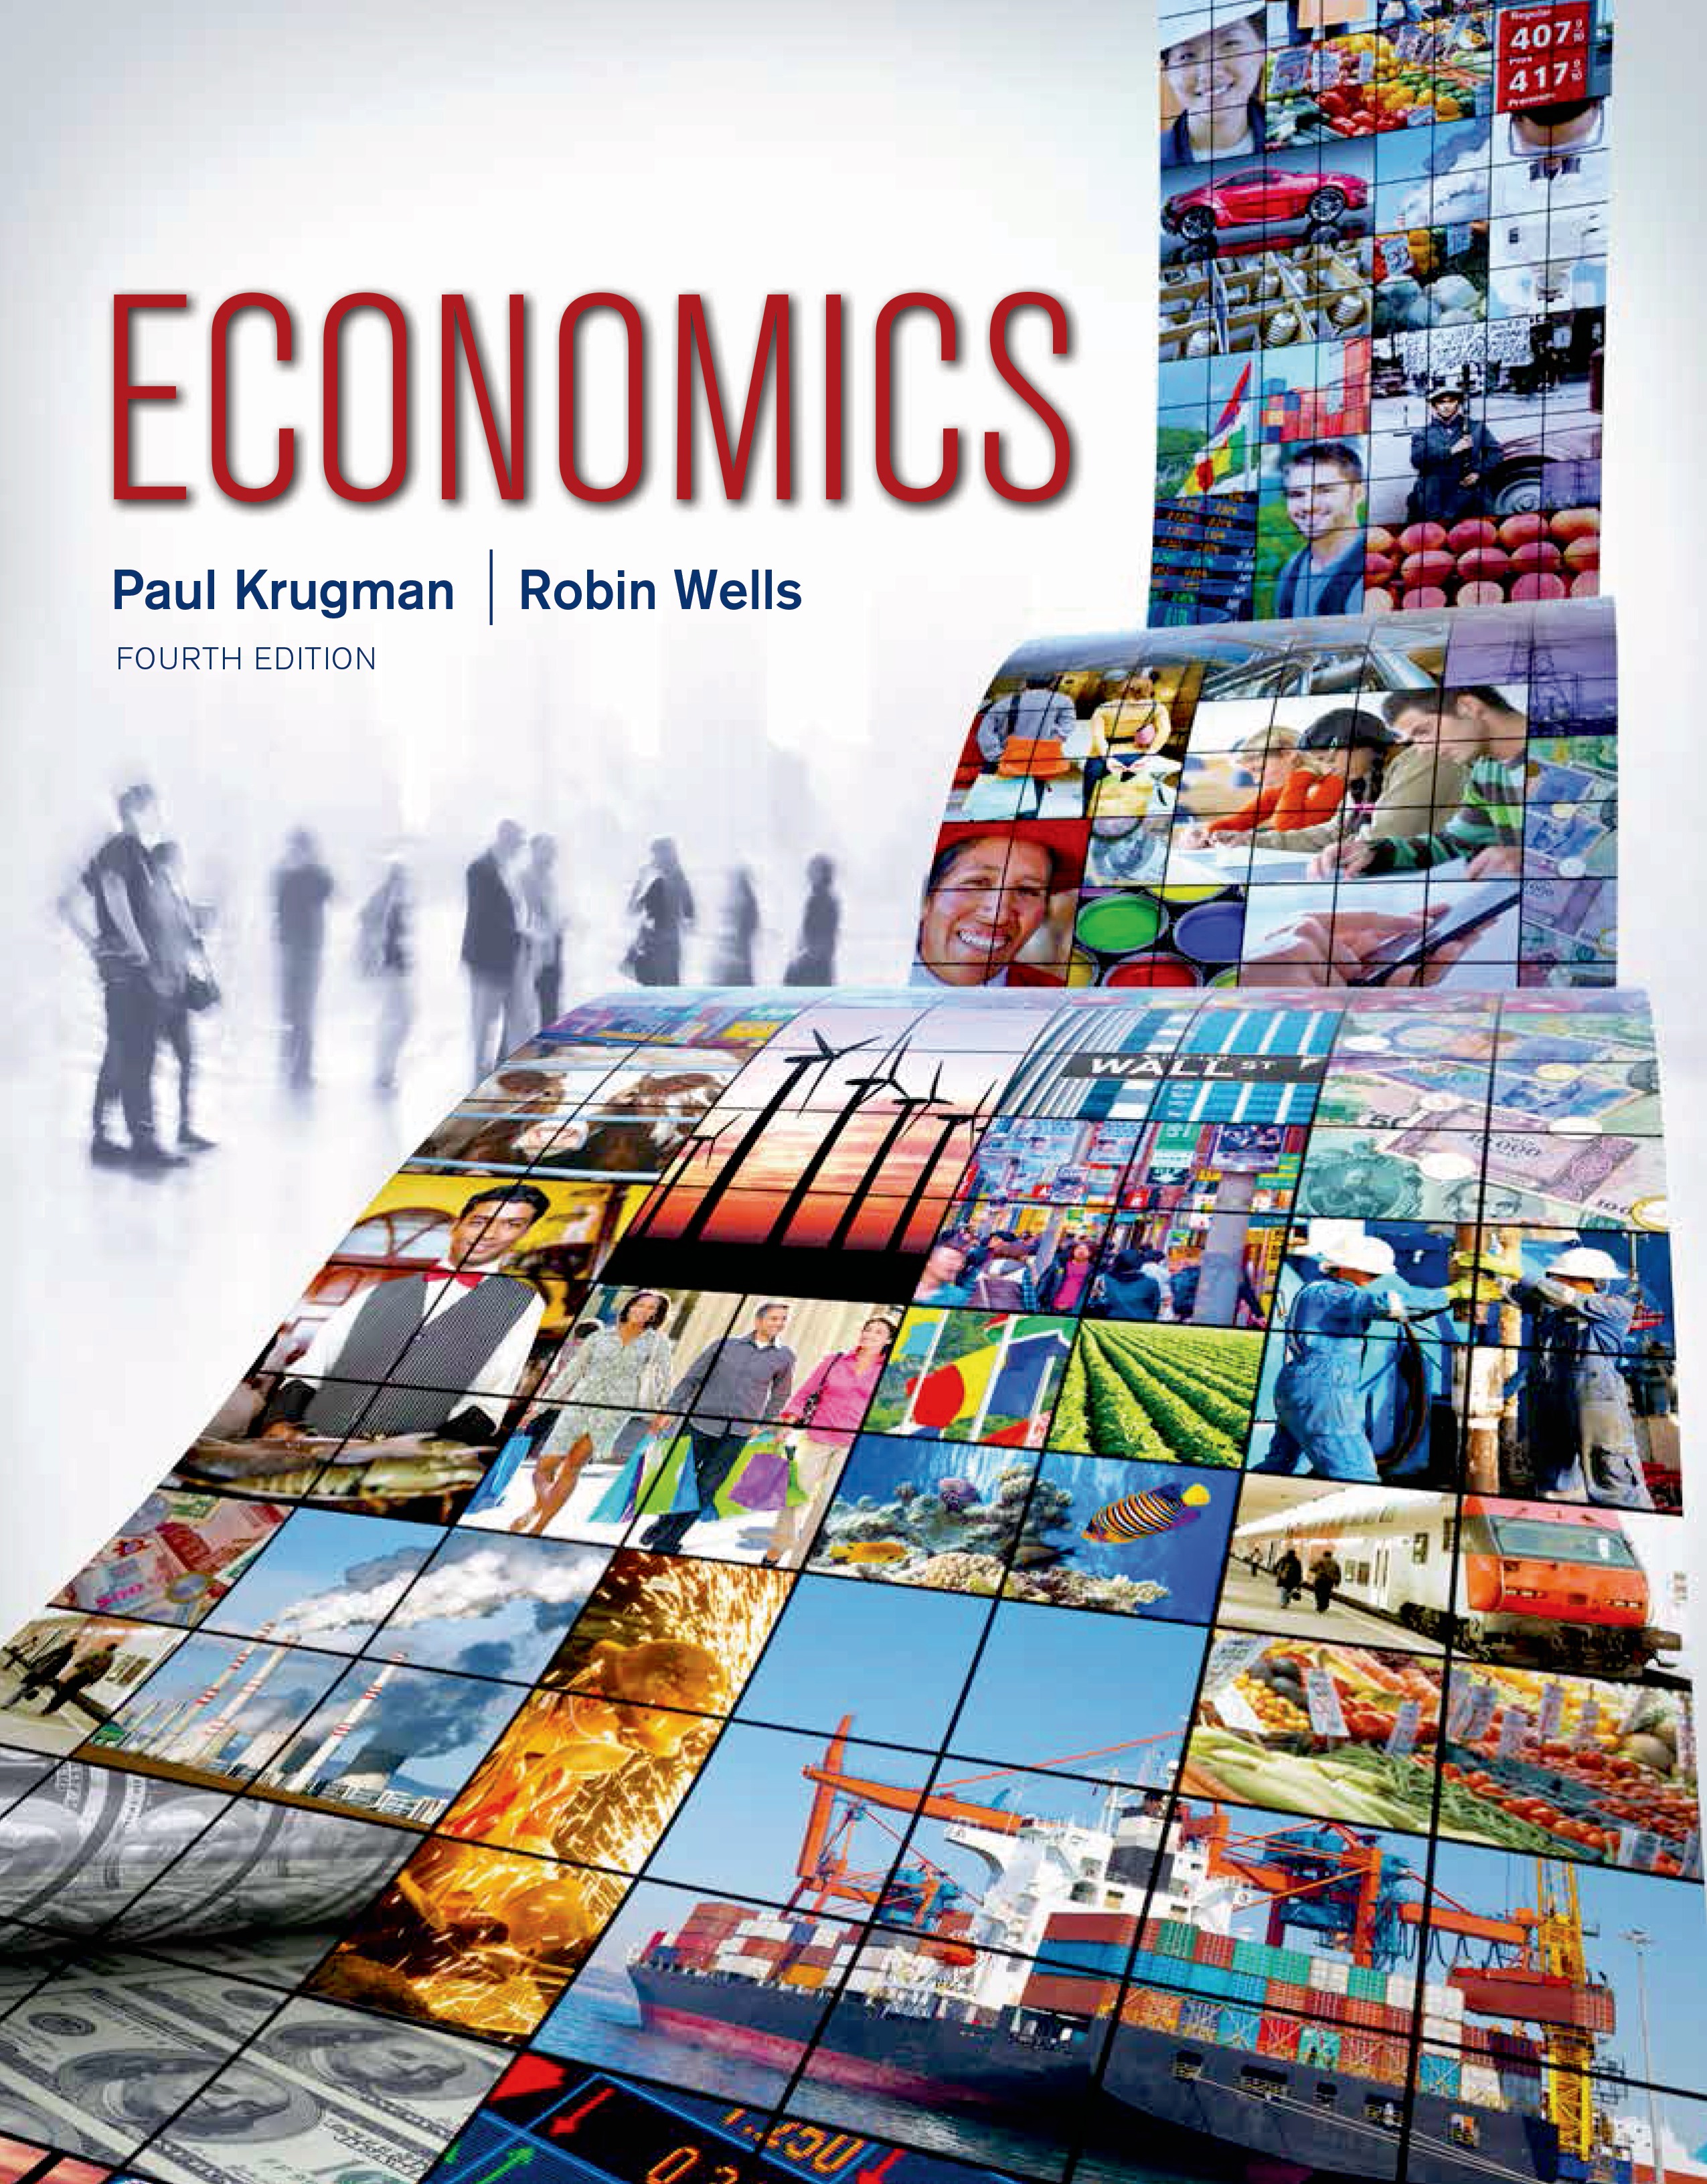 a level economics book pdf